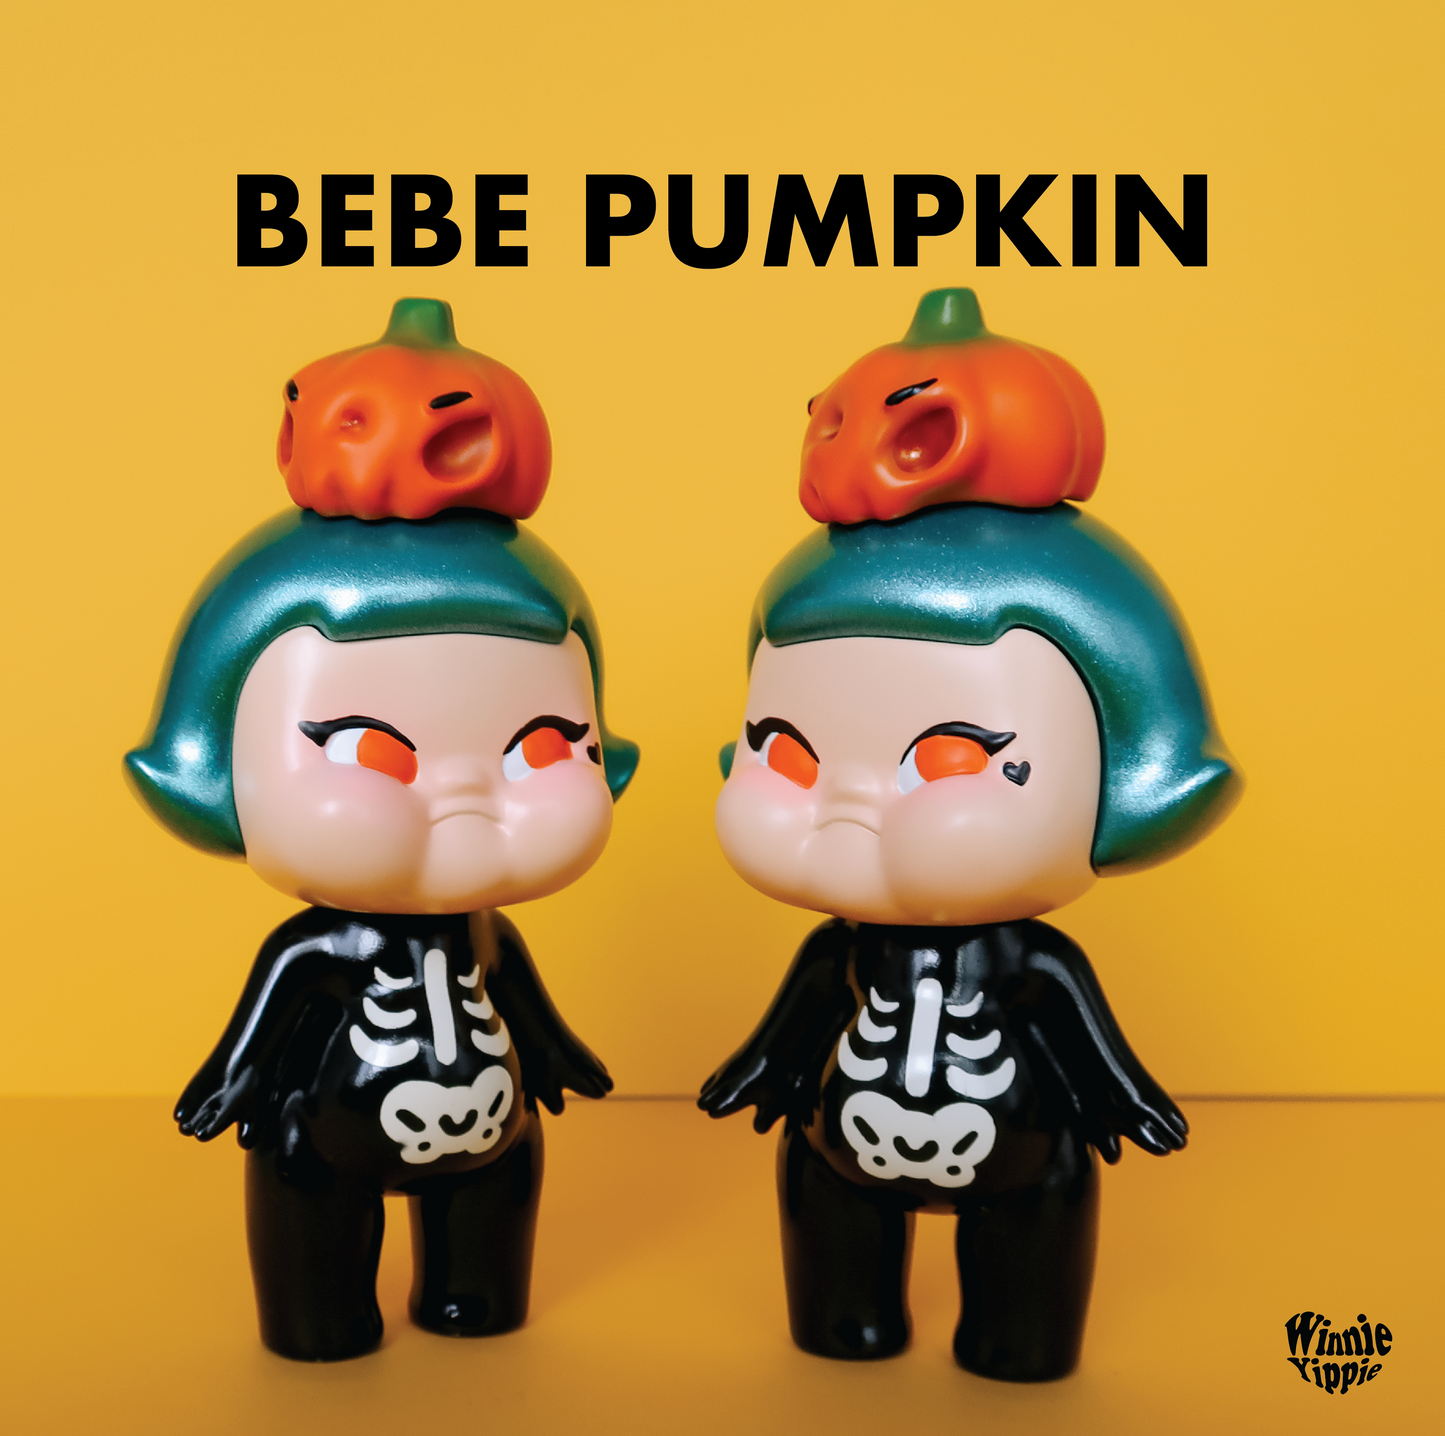 BEBE Pumpkin